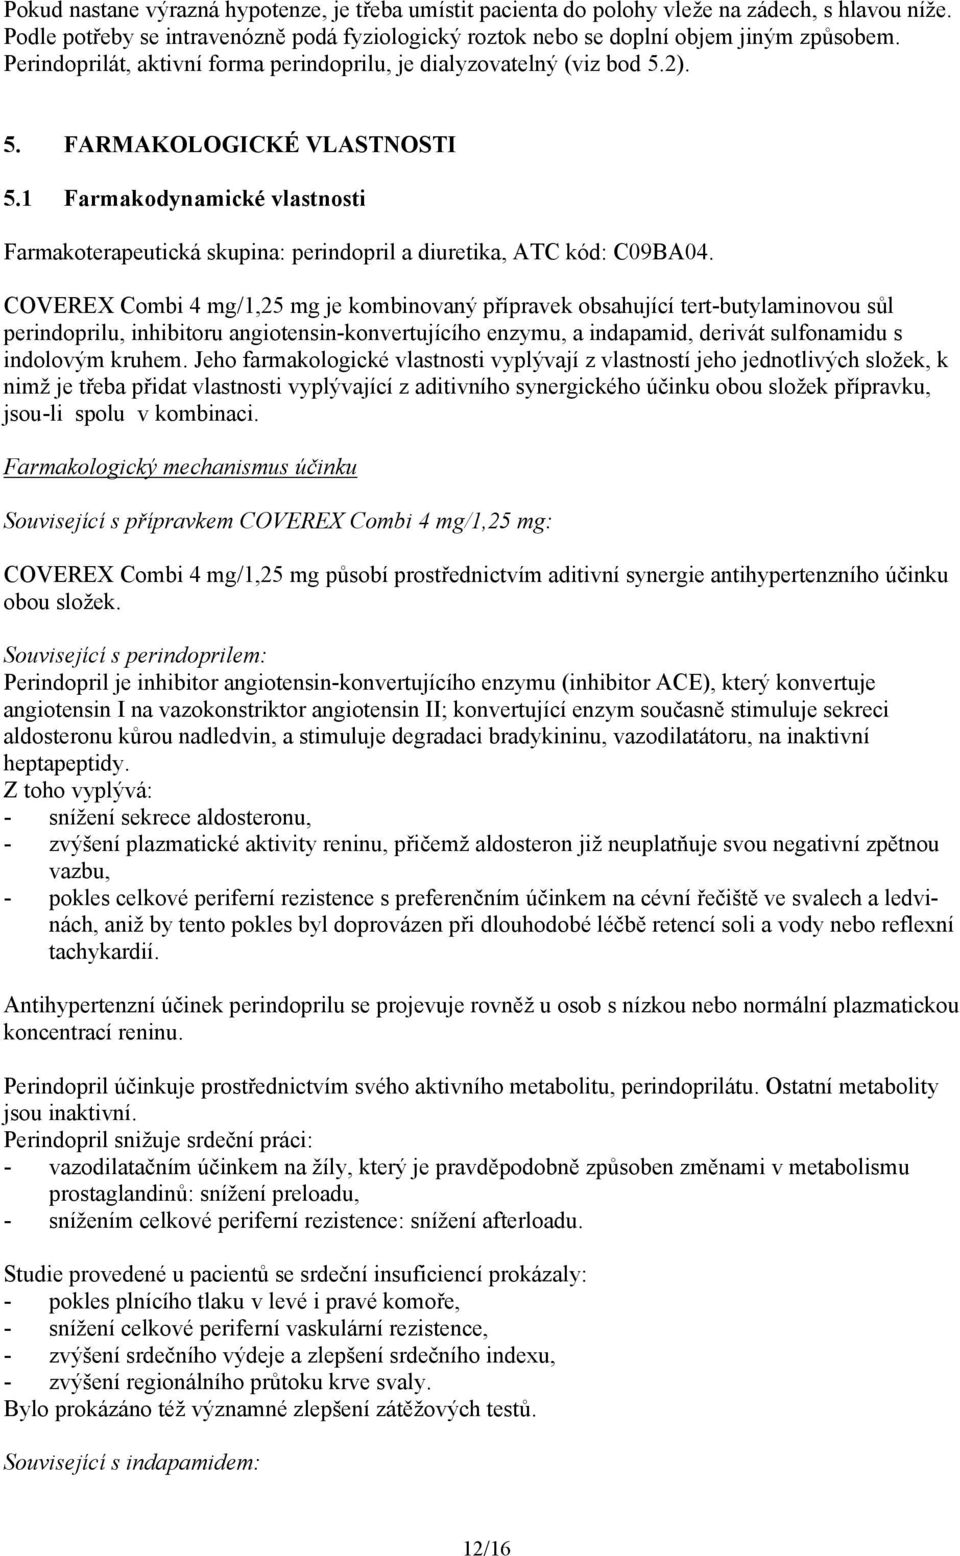 1 Farmakodynamické vlastnosti Farmakoterapeutická skupina: perindopril a diuretika, ATC kód: C09BA04.